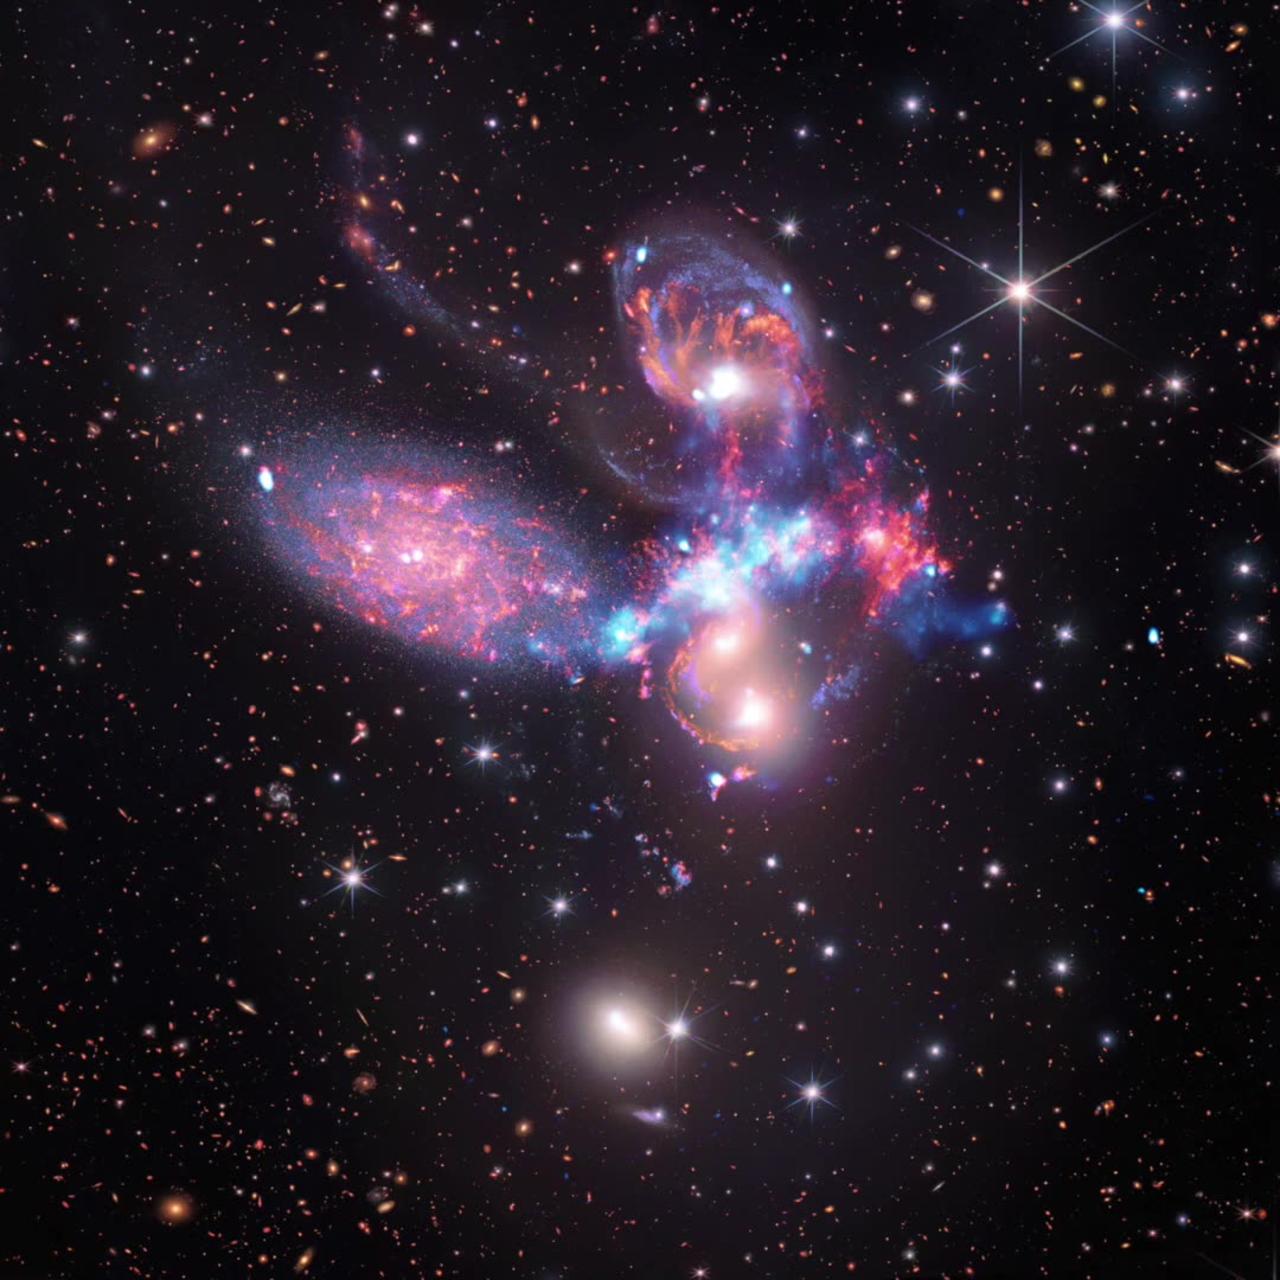 Stephan's Quintet Sonification from Chandra X-Ray Observatory, NASA Telescopes